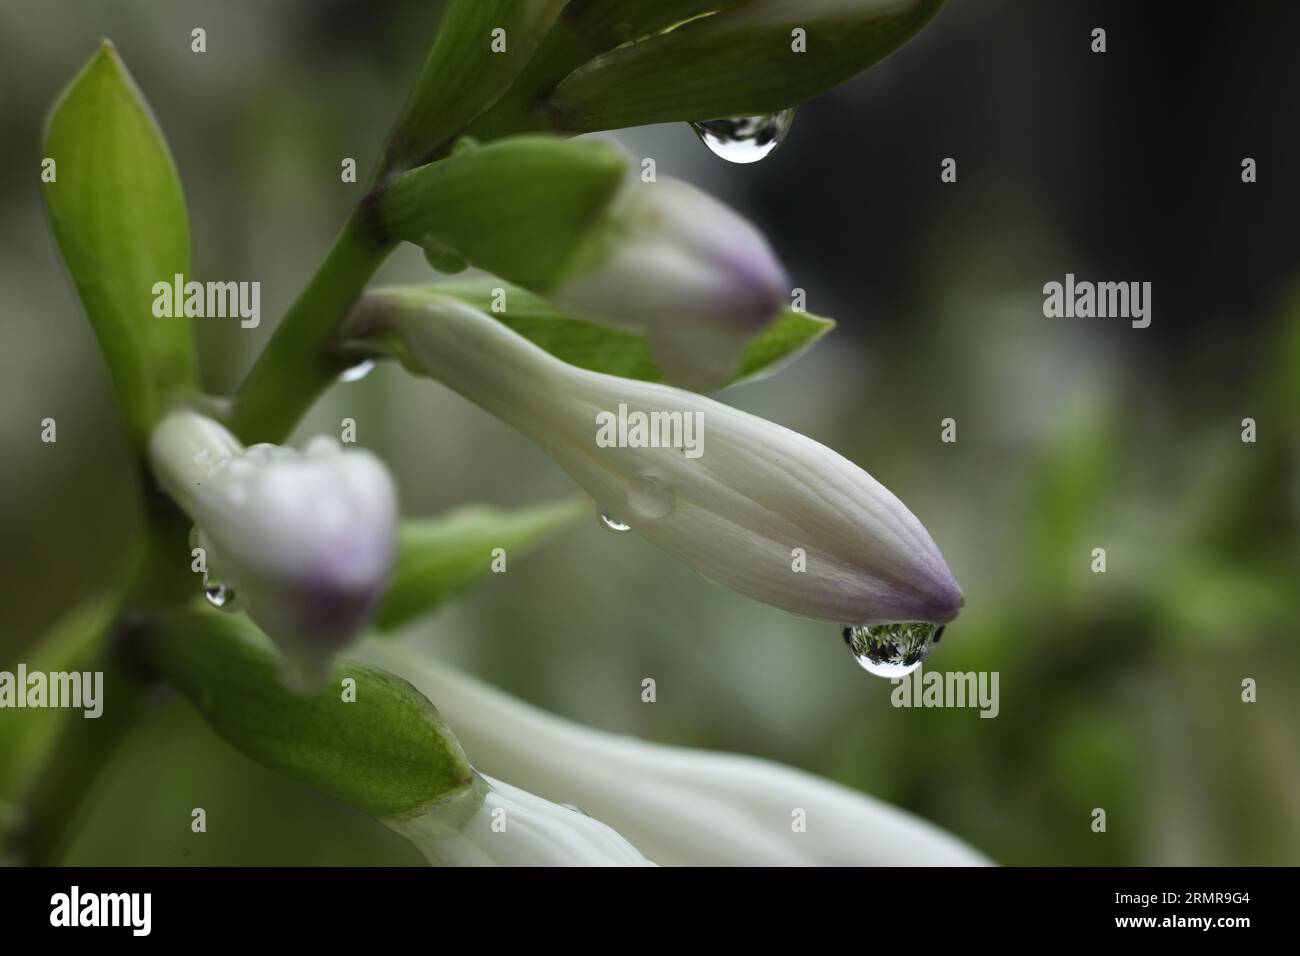 a close up of Hosta capitata blossom covered in rain drops Stock Photo